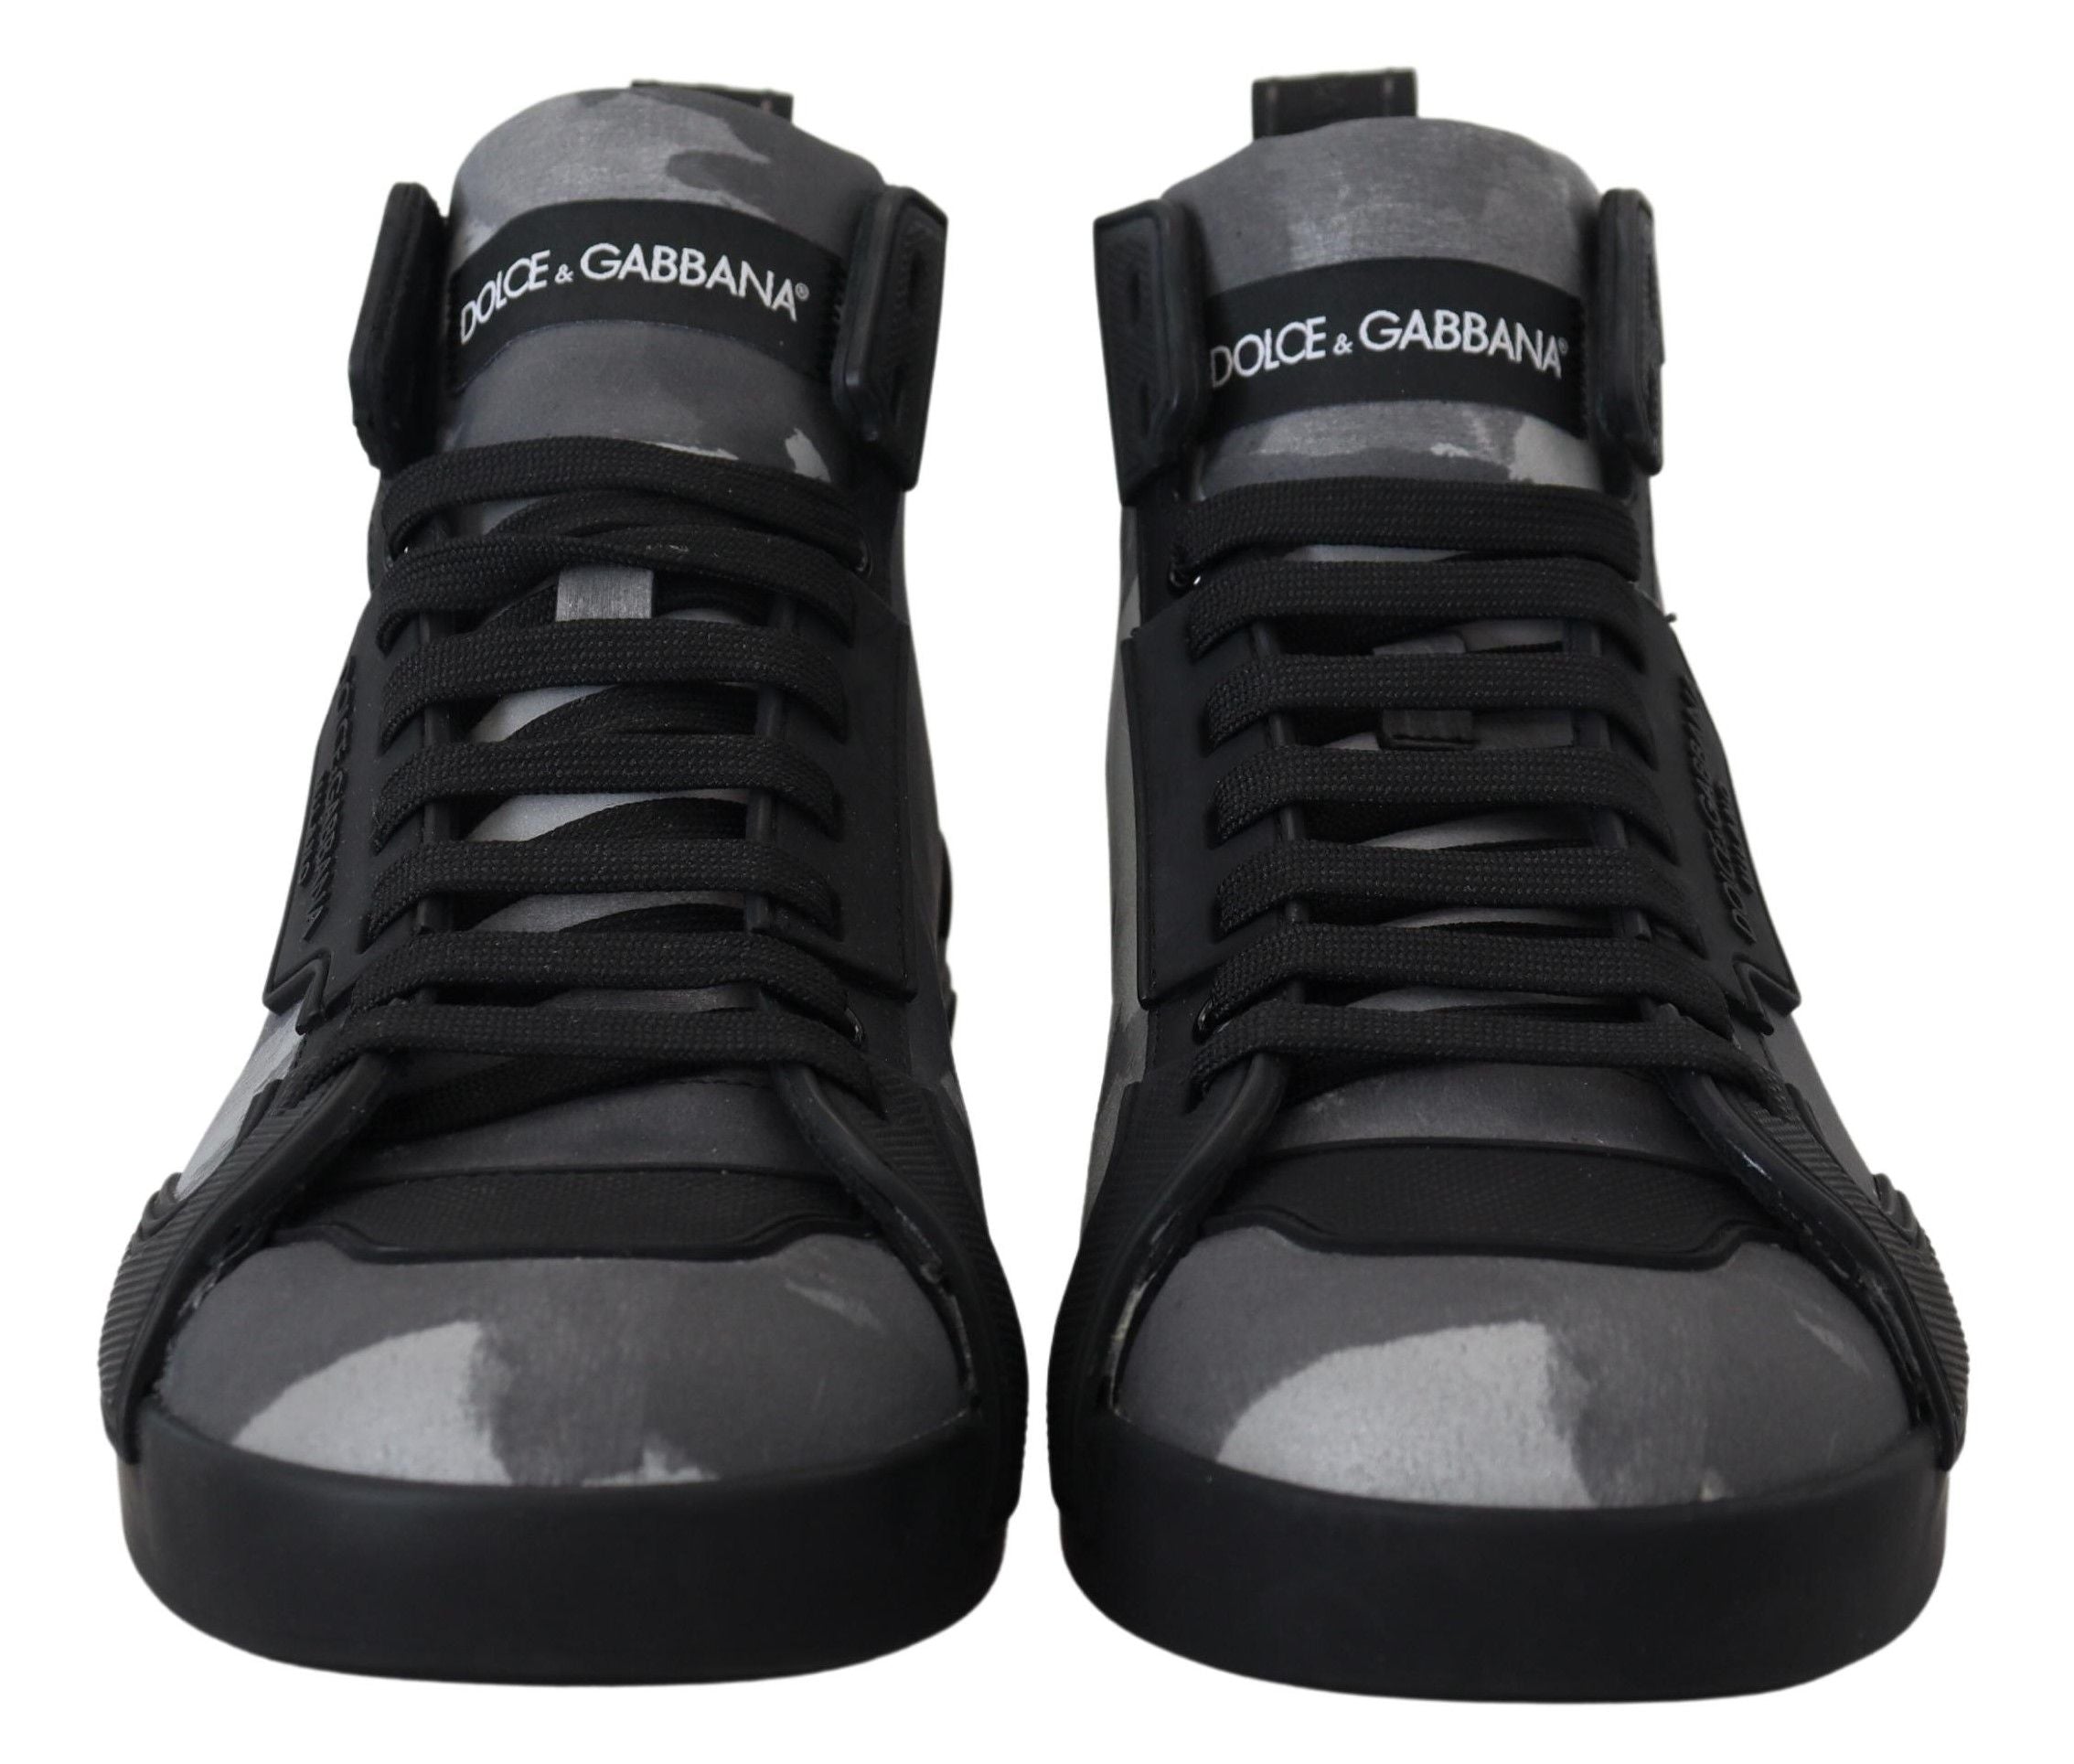 Dolce & Gabbana Camo Gray High-Top Sneakers